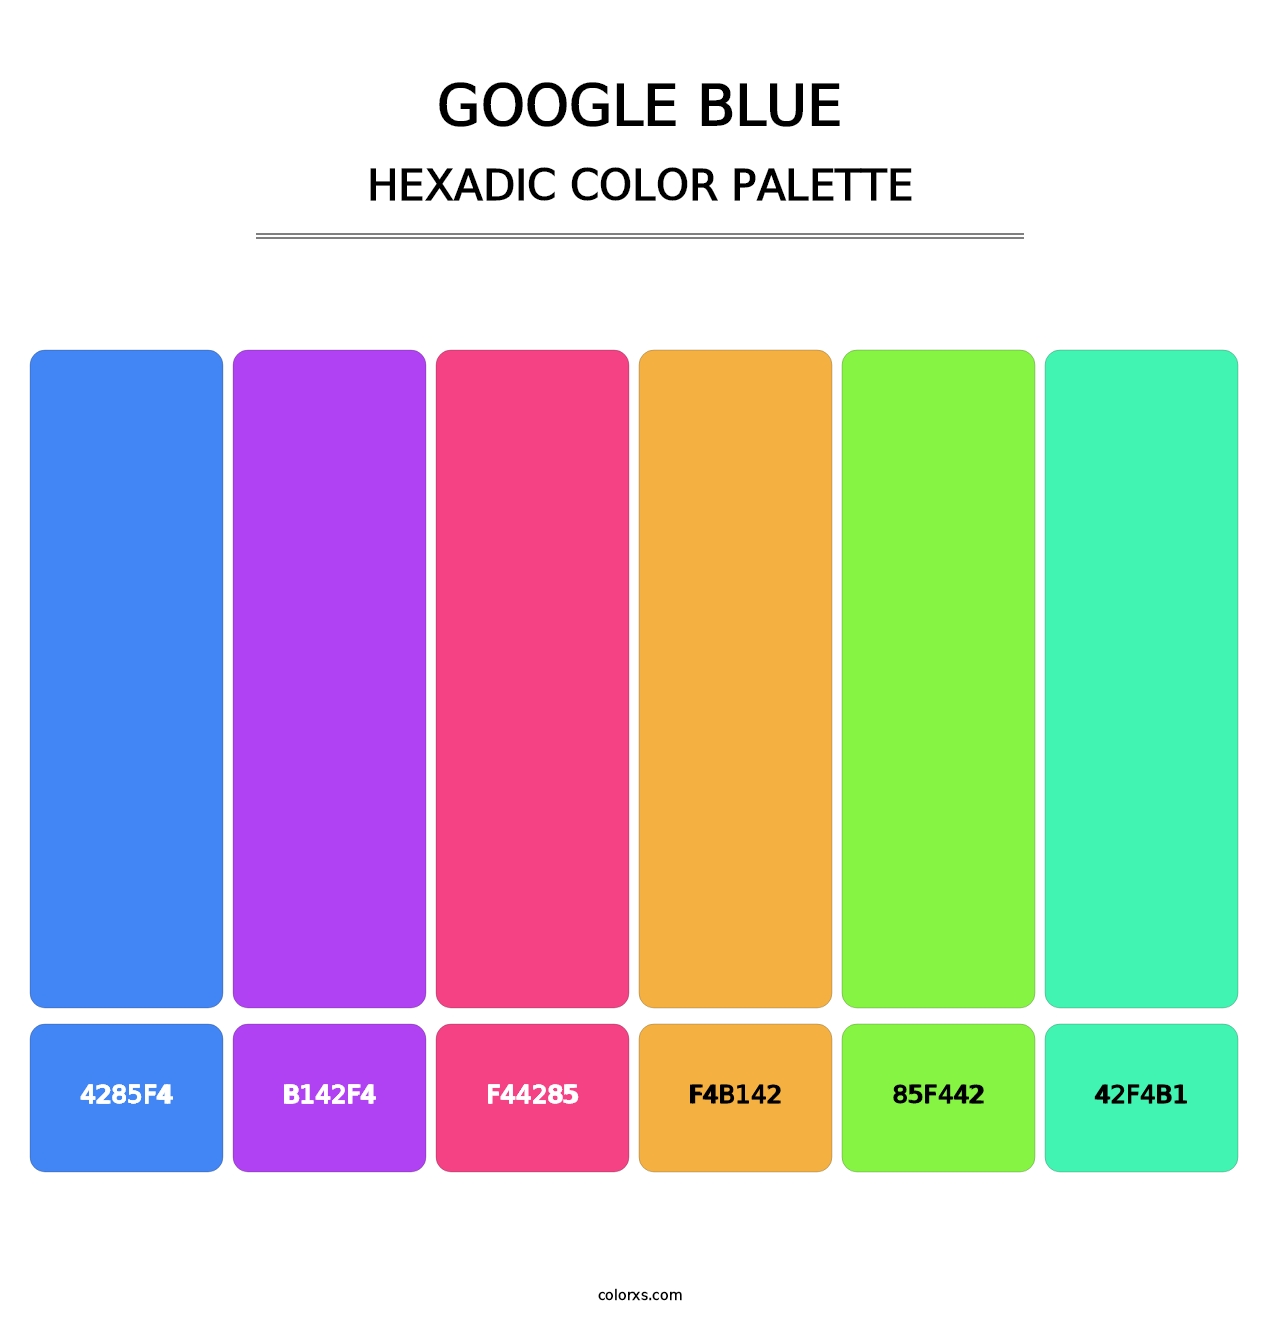 Google Blue - Hexadic Color Palette